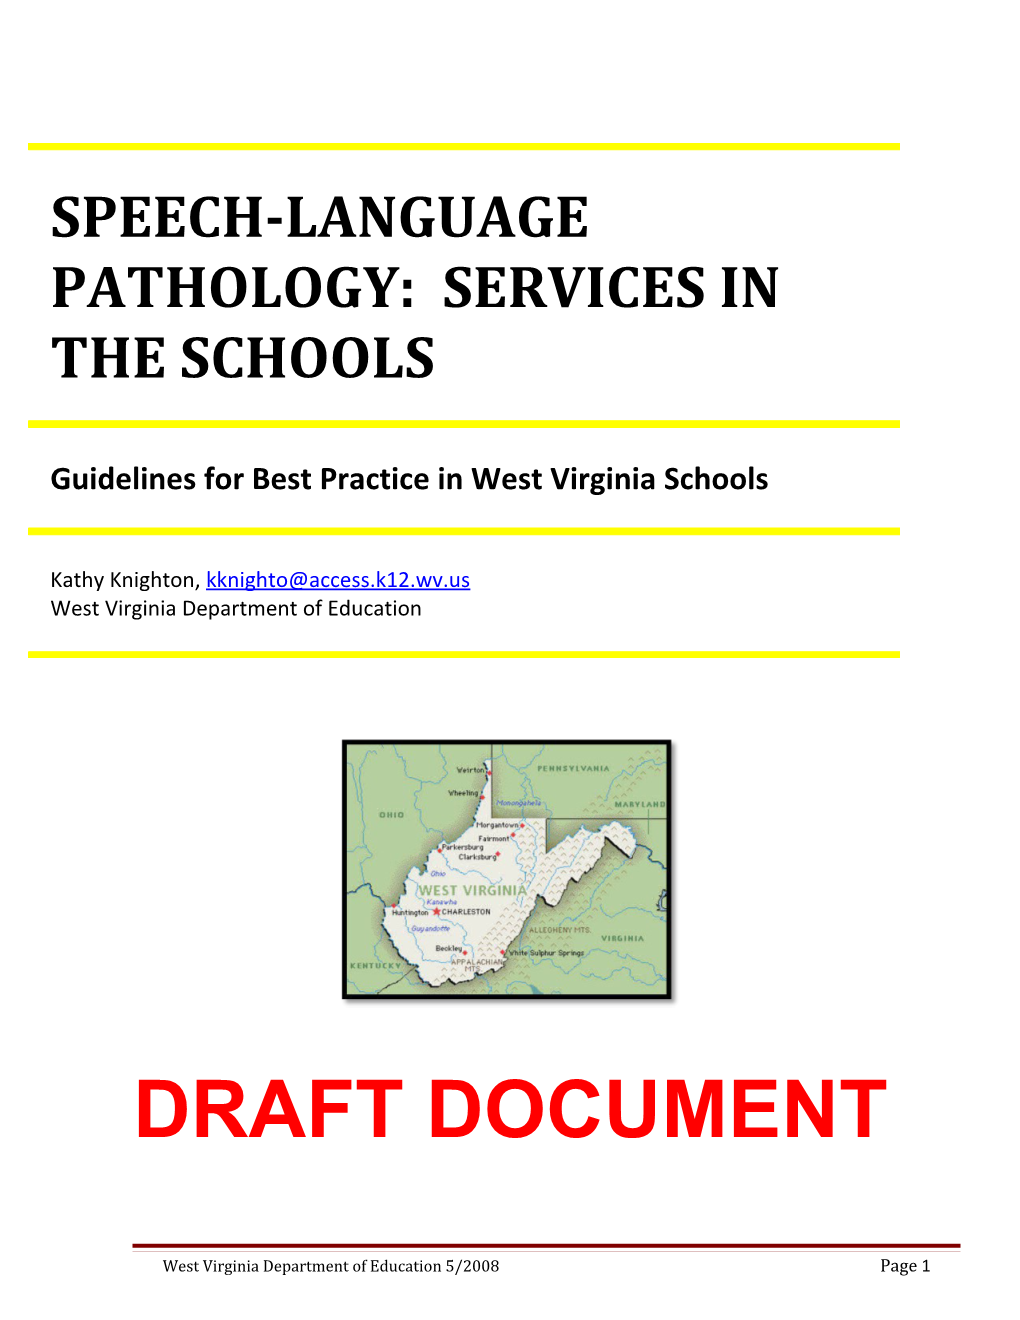 Speech-Language Pathology: Services in the Schools